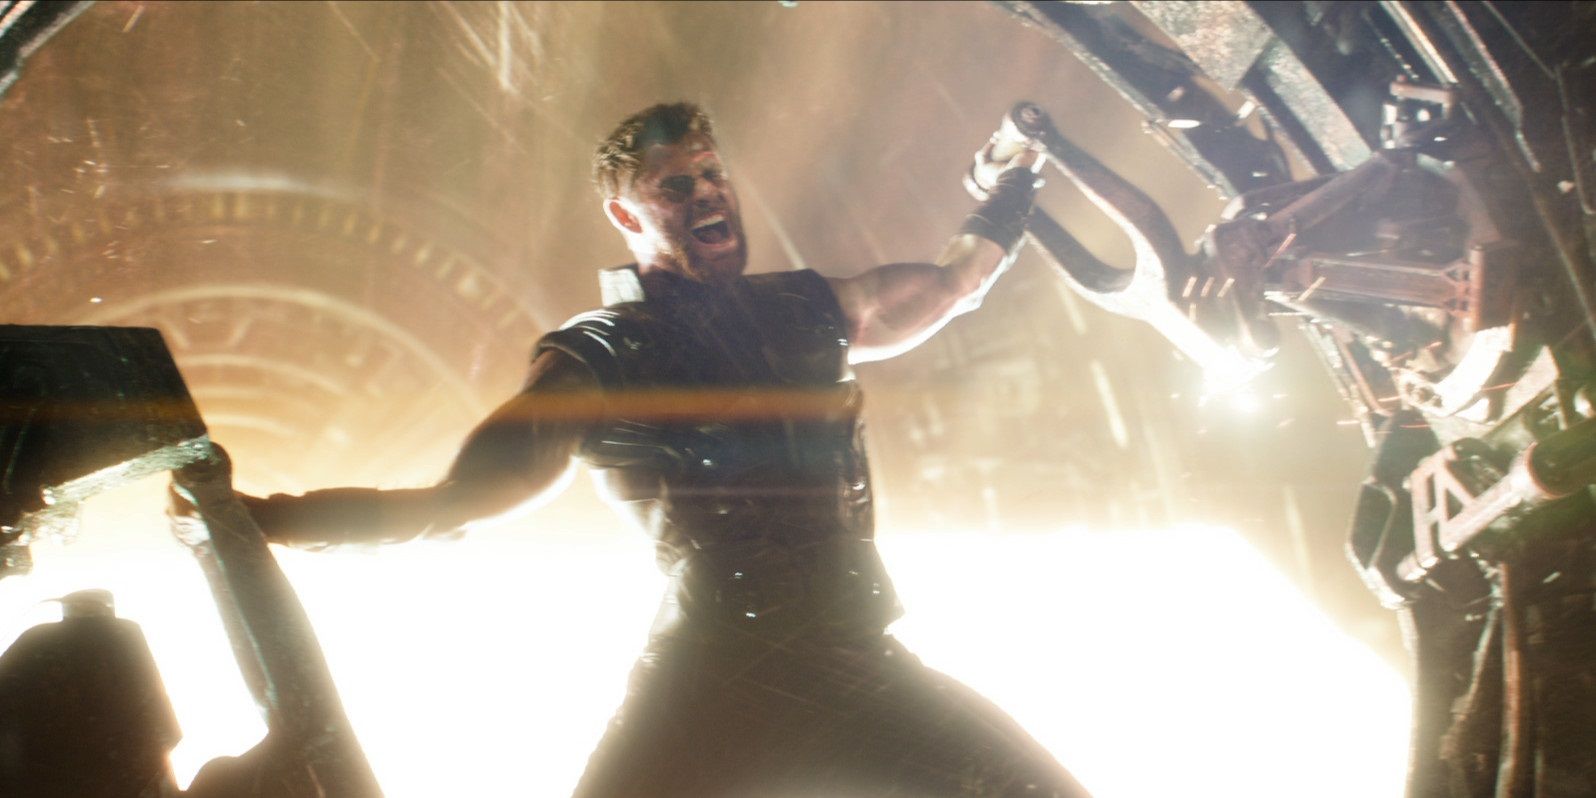 Thor crafting Stormbreaker in Avengers: Infinity War